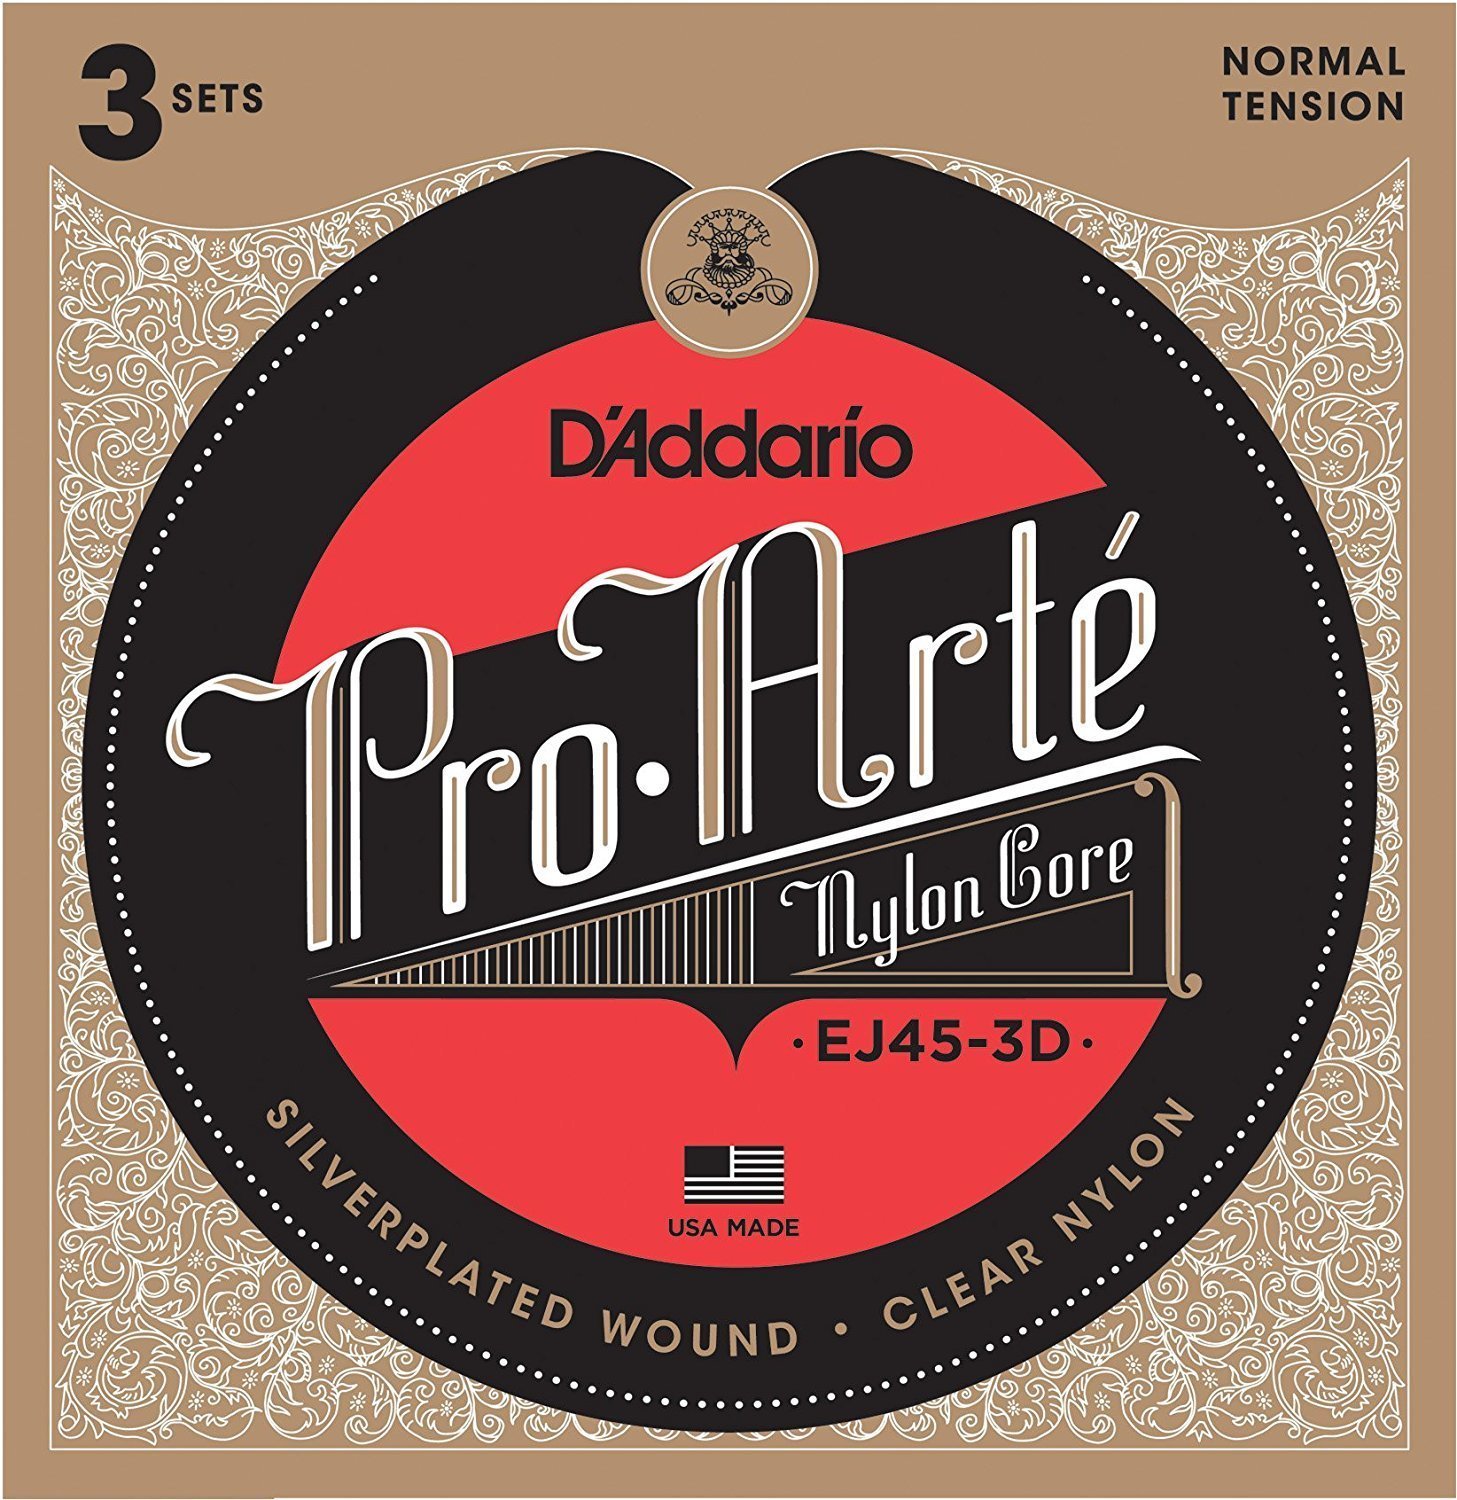 D'Addario EJ45-3D Pro-Arte Nylon Classical Guitar Strings - Normal Tension - 3 Sets